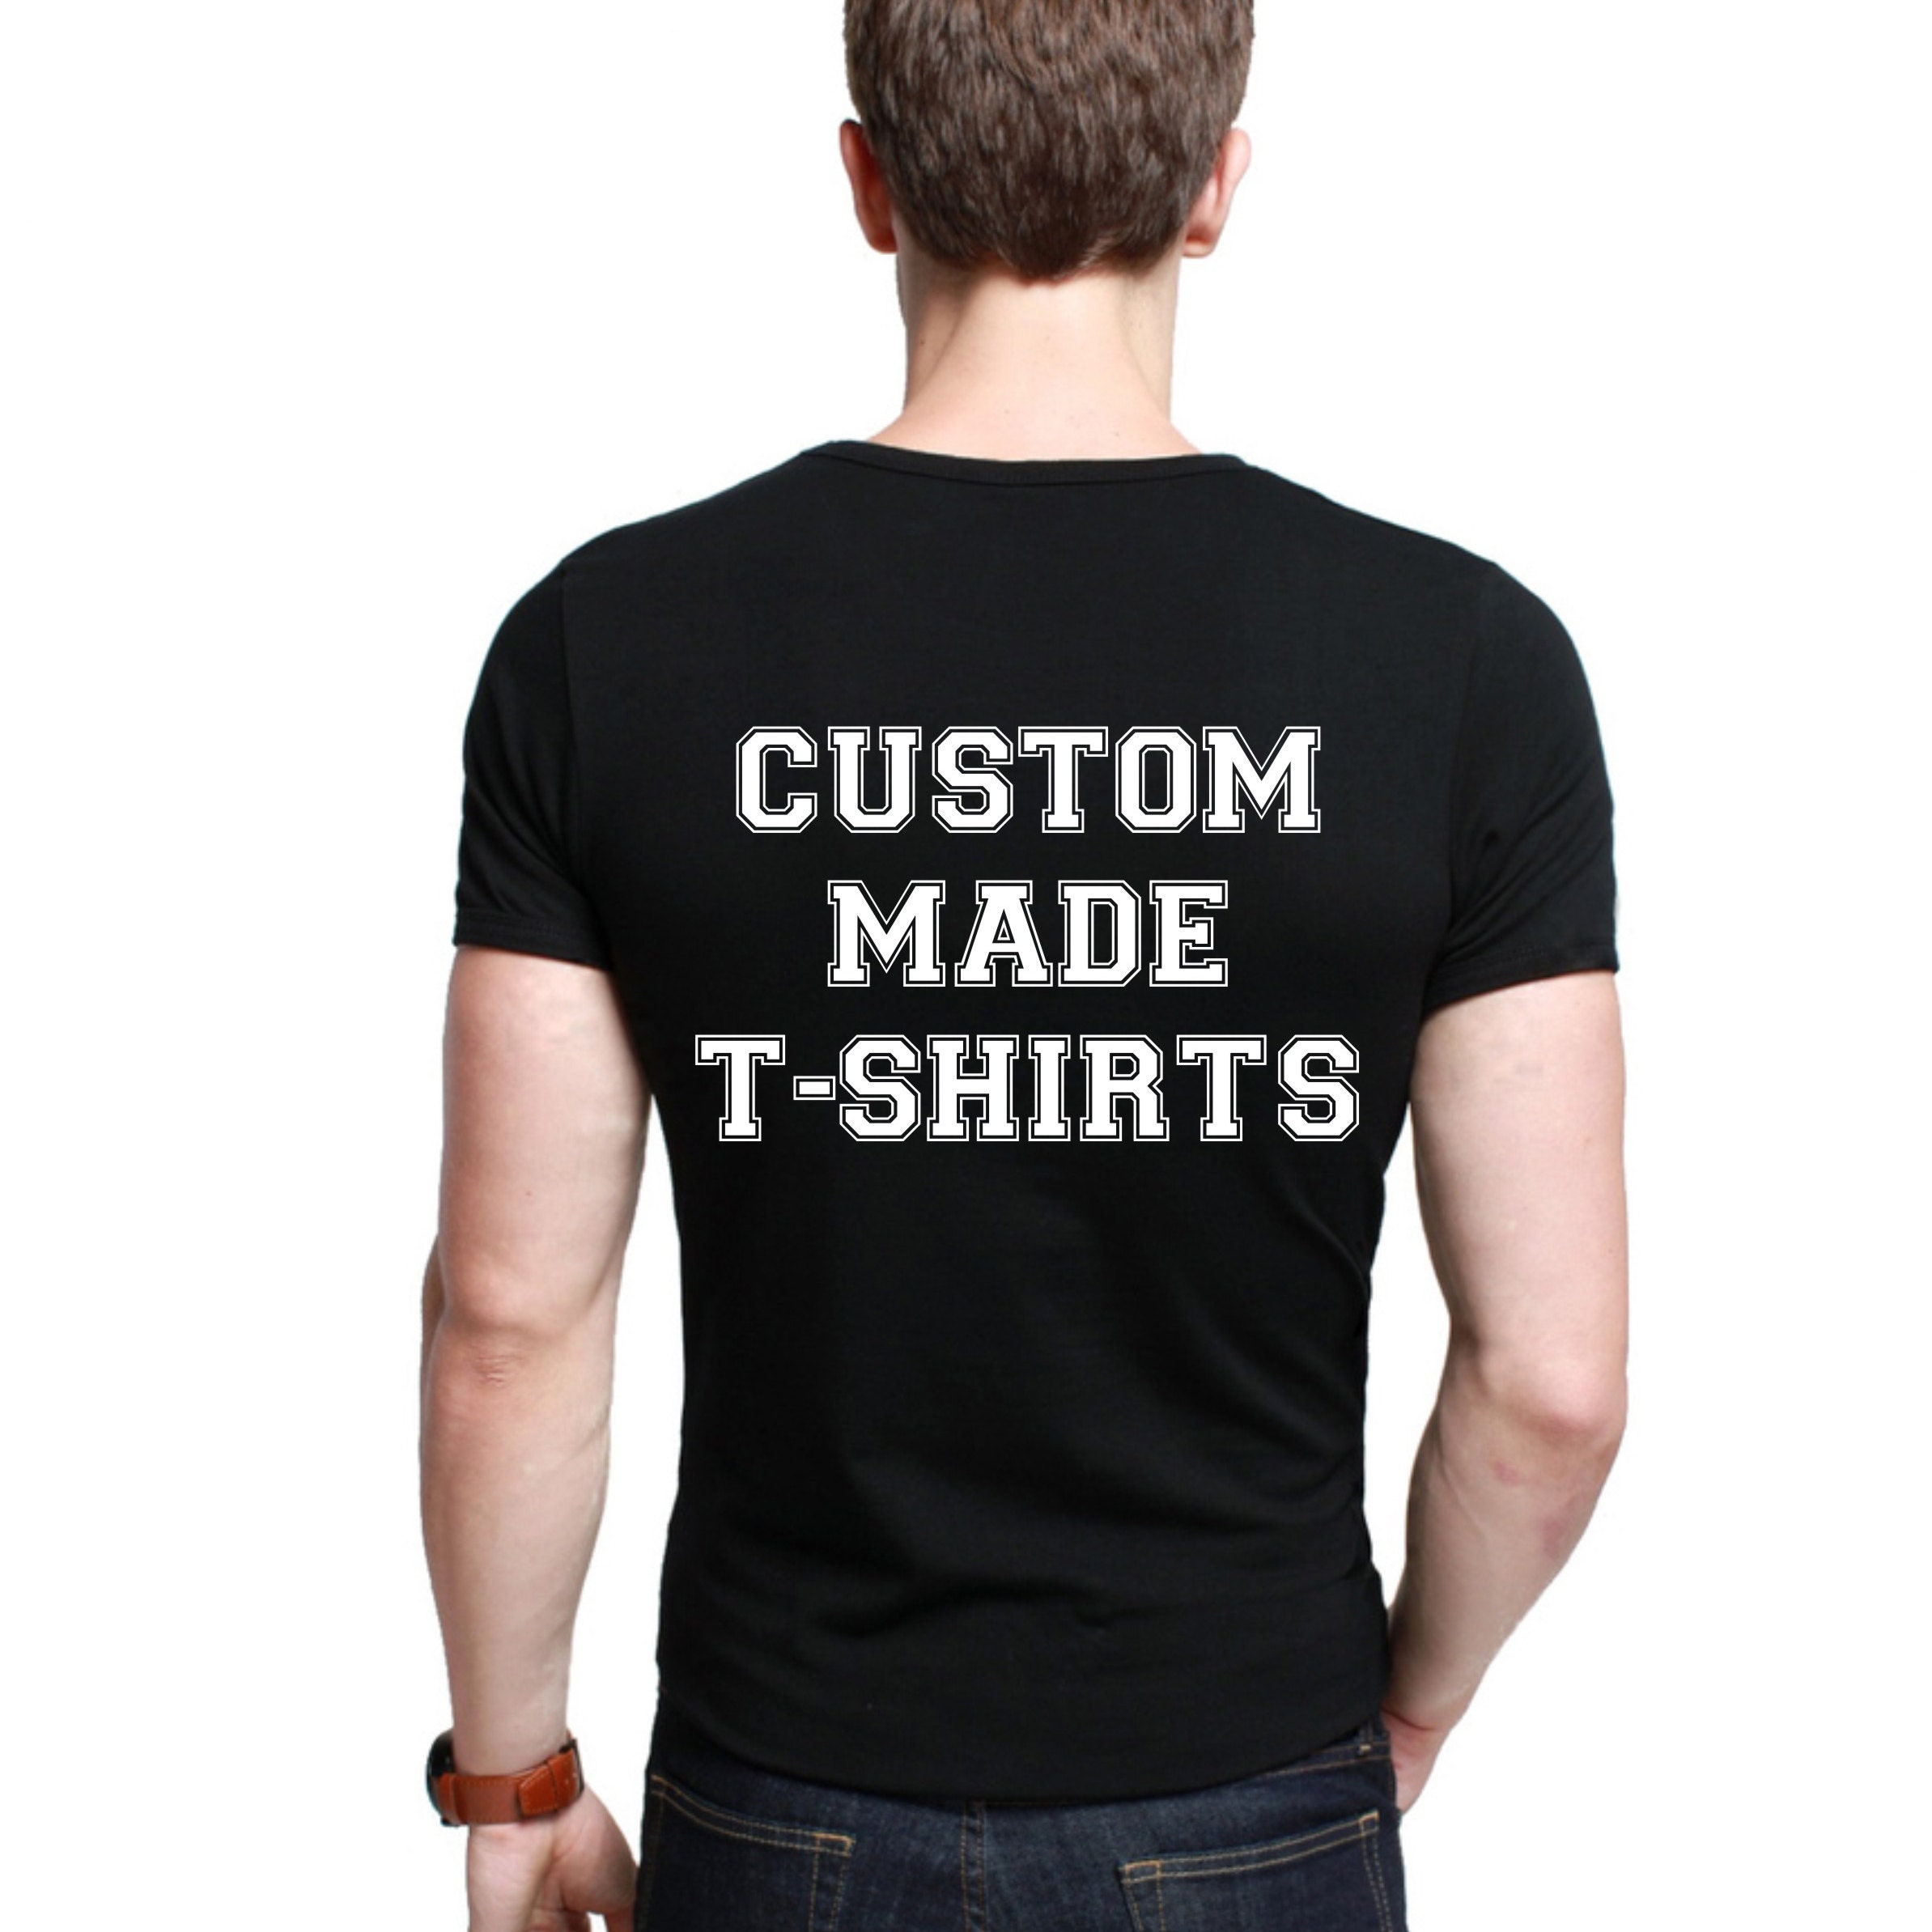 Custom T-shirts Matching T-Shirts by UltimateTShirtShop on Etsy